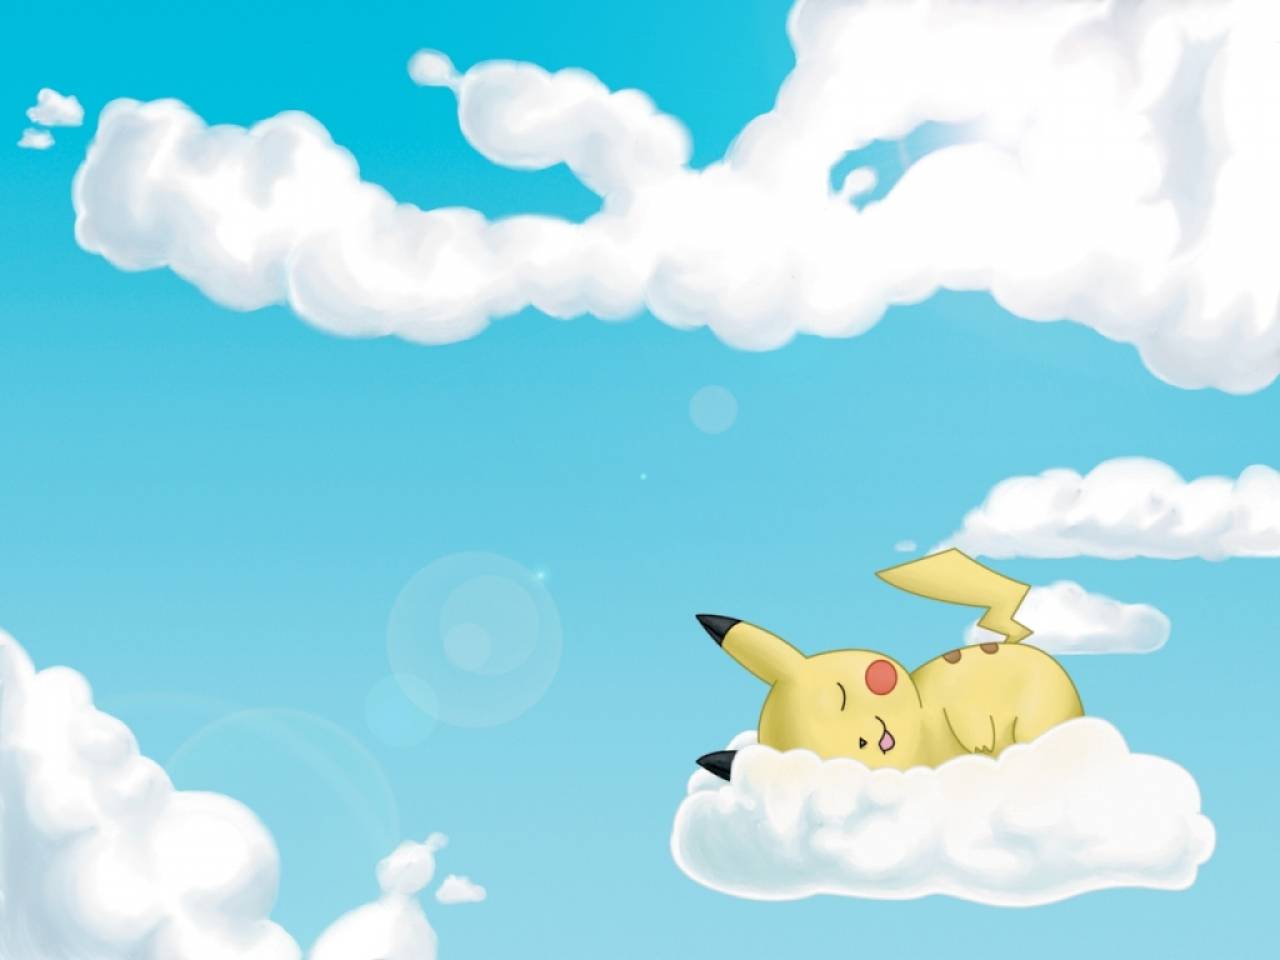 Cute Pikachu sleeping